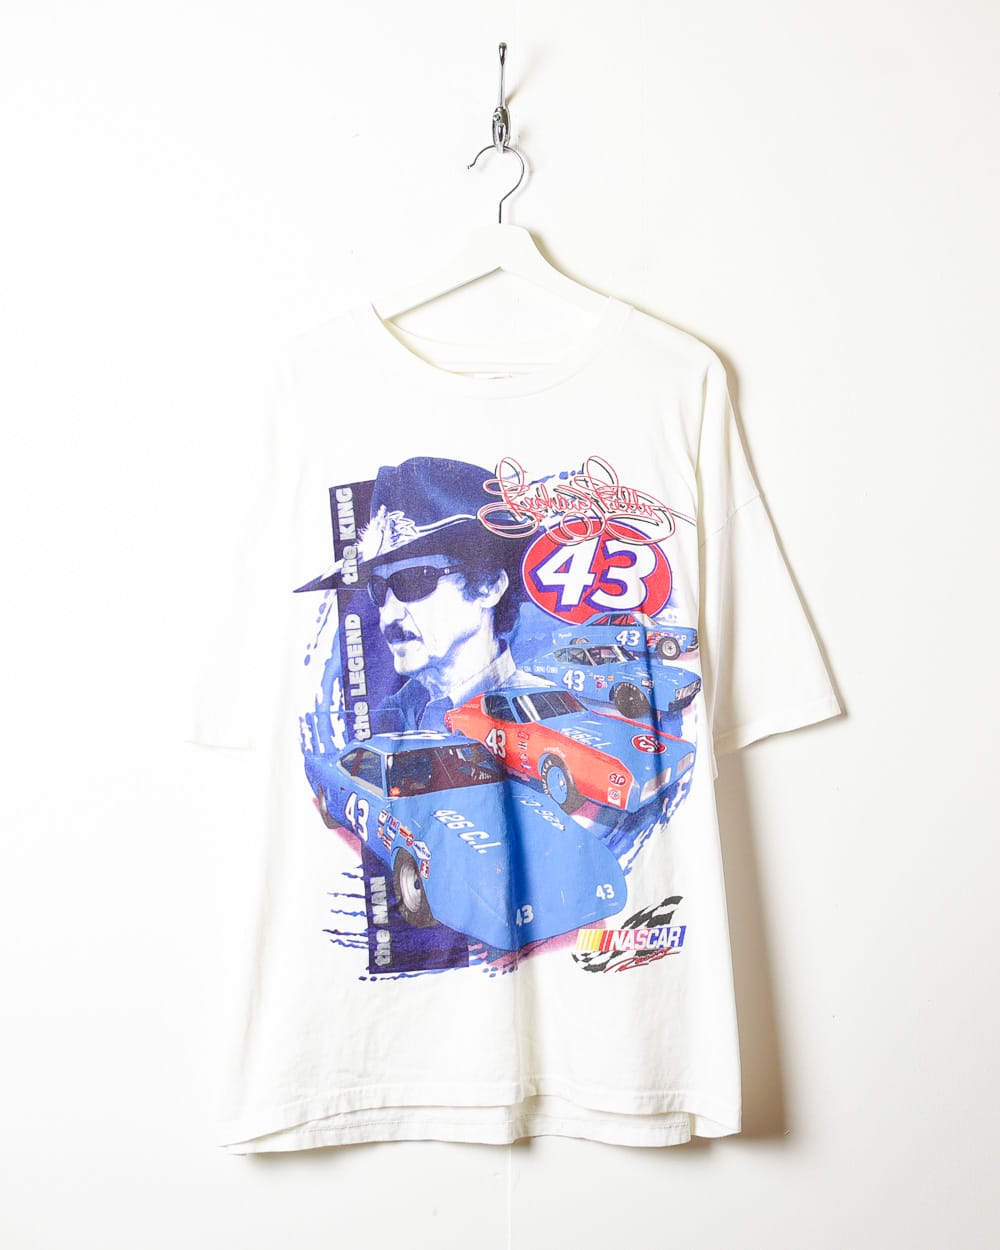 White Nascar Racing Richard Petty Tribute T-Shirt - XX-Large